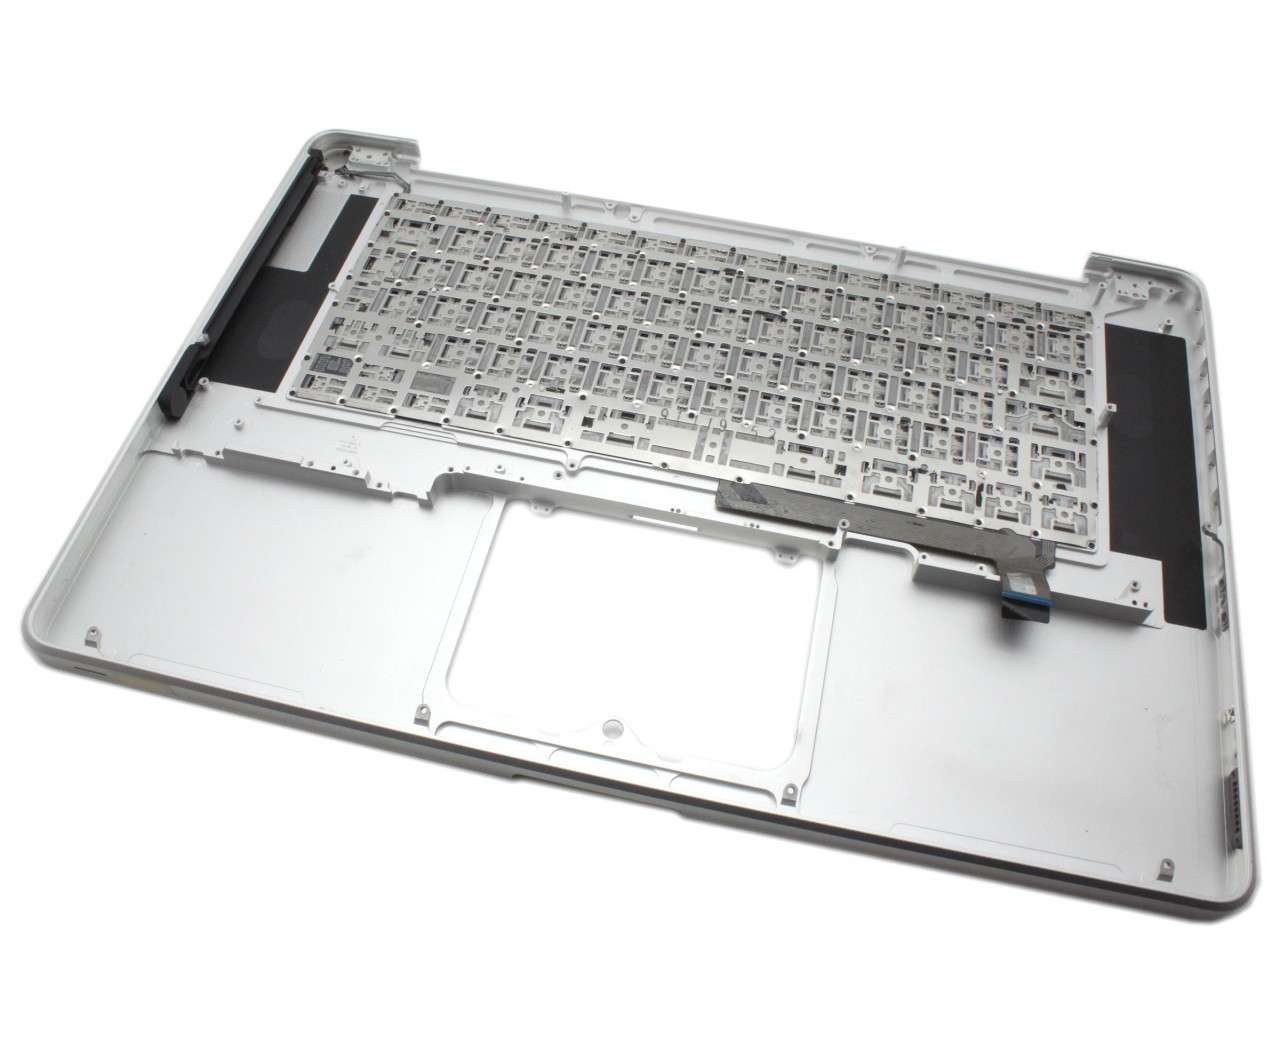 Tastatura Apple MacBook Pro 15 MB470LL A Neagra cu Palmrest Argintiu Refurbished Apple Apple